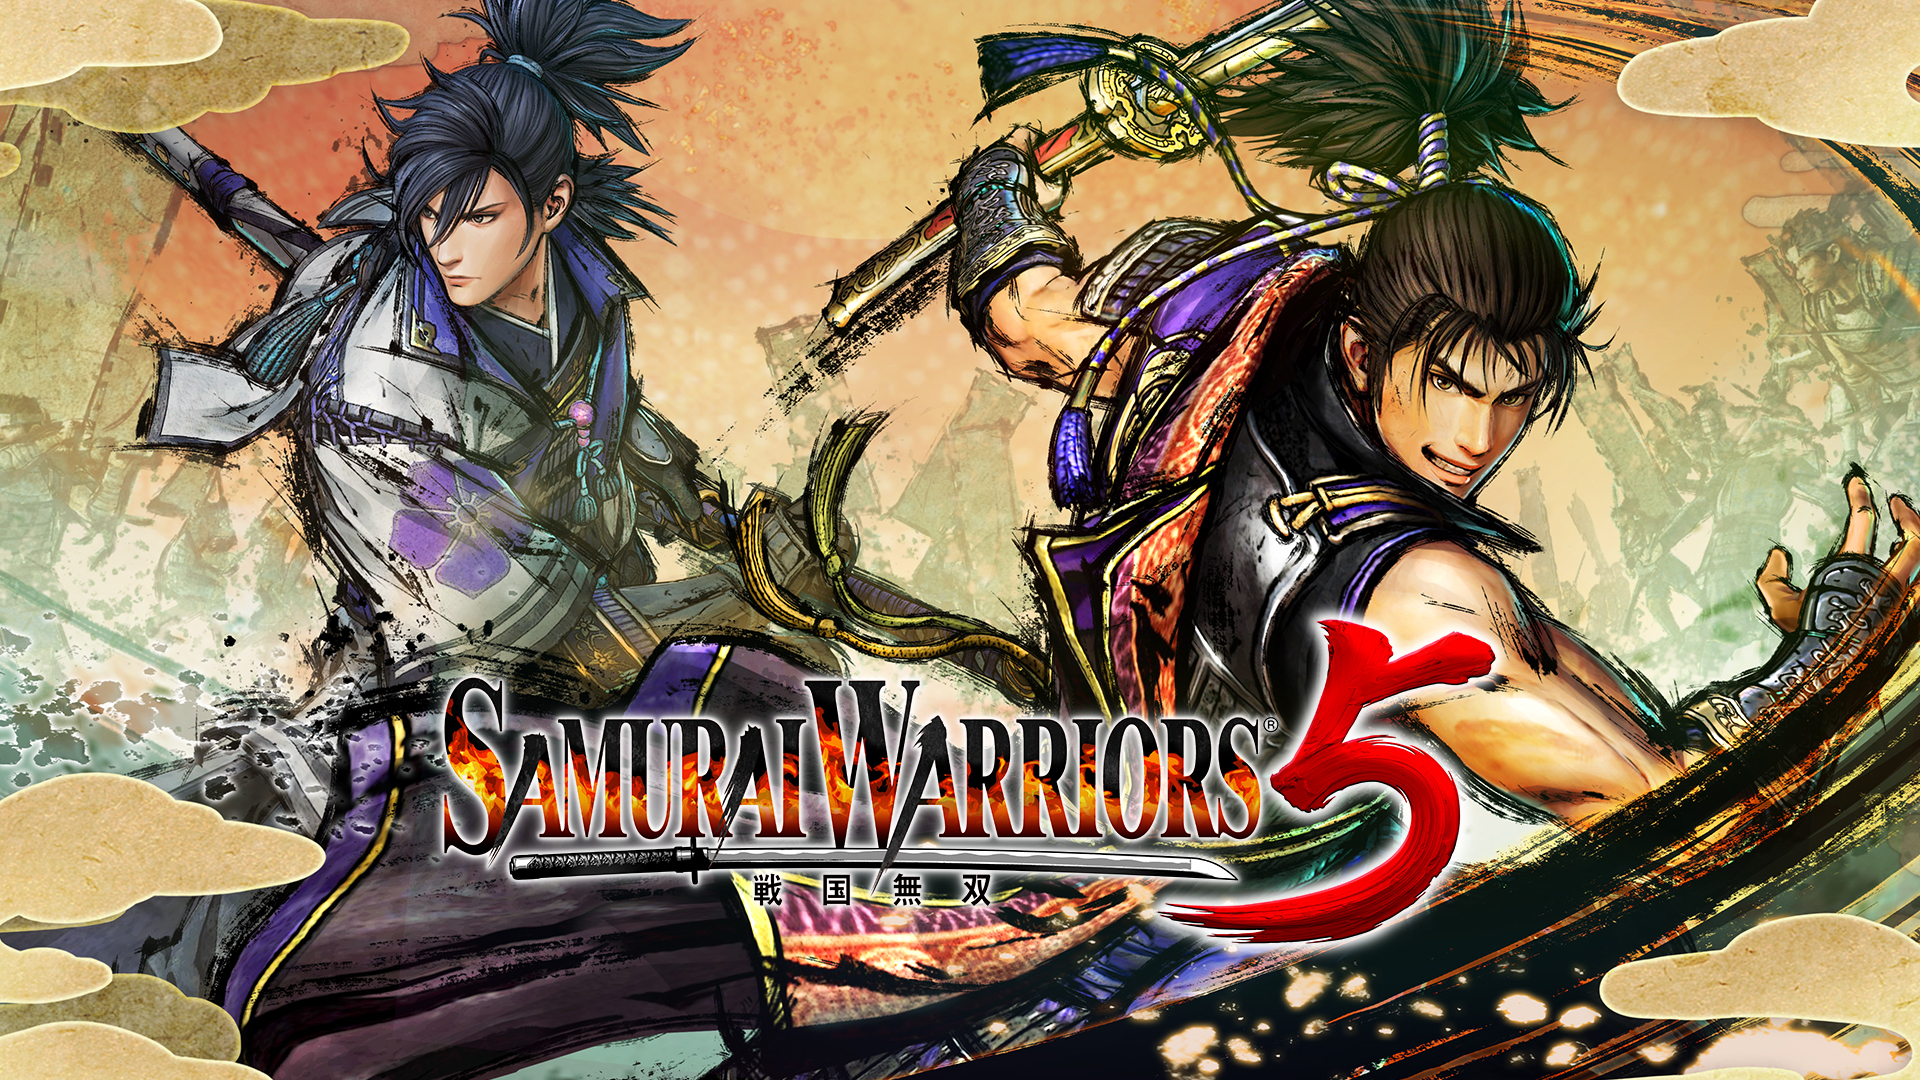 samurai_warriors_5_splash Samurai Warriors 5 - PC (Steam) Review